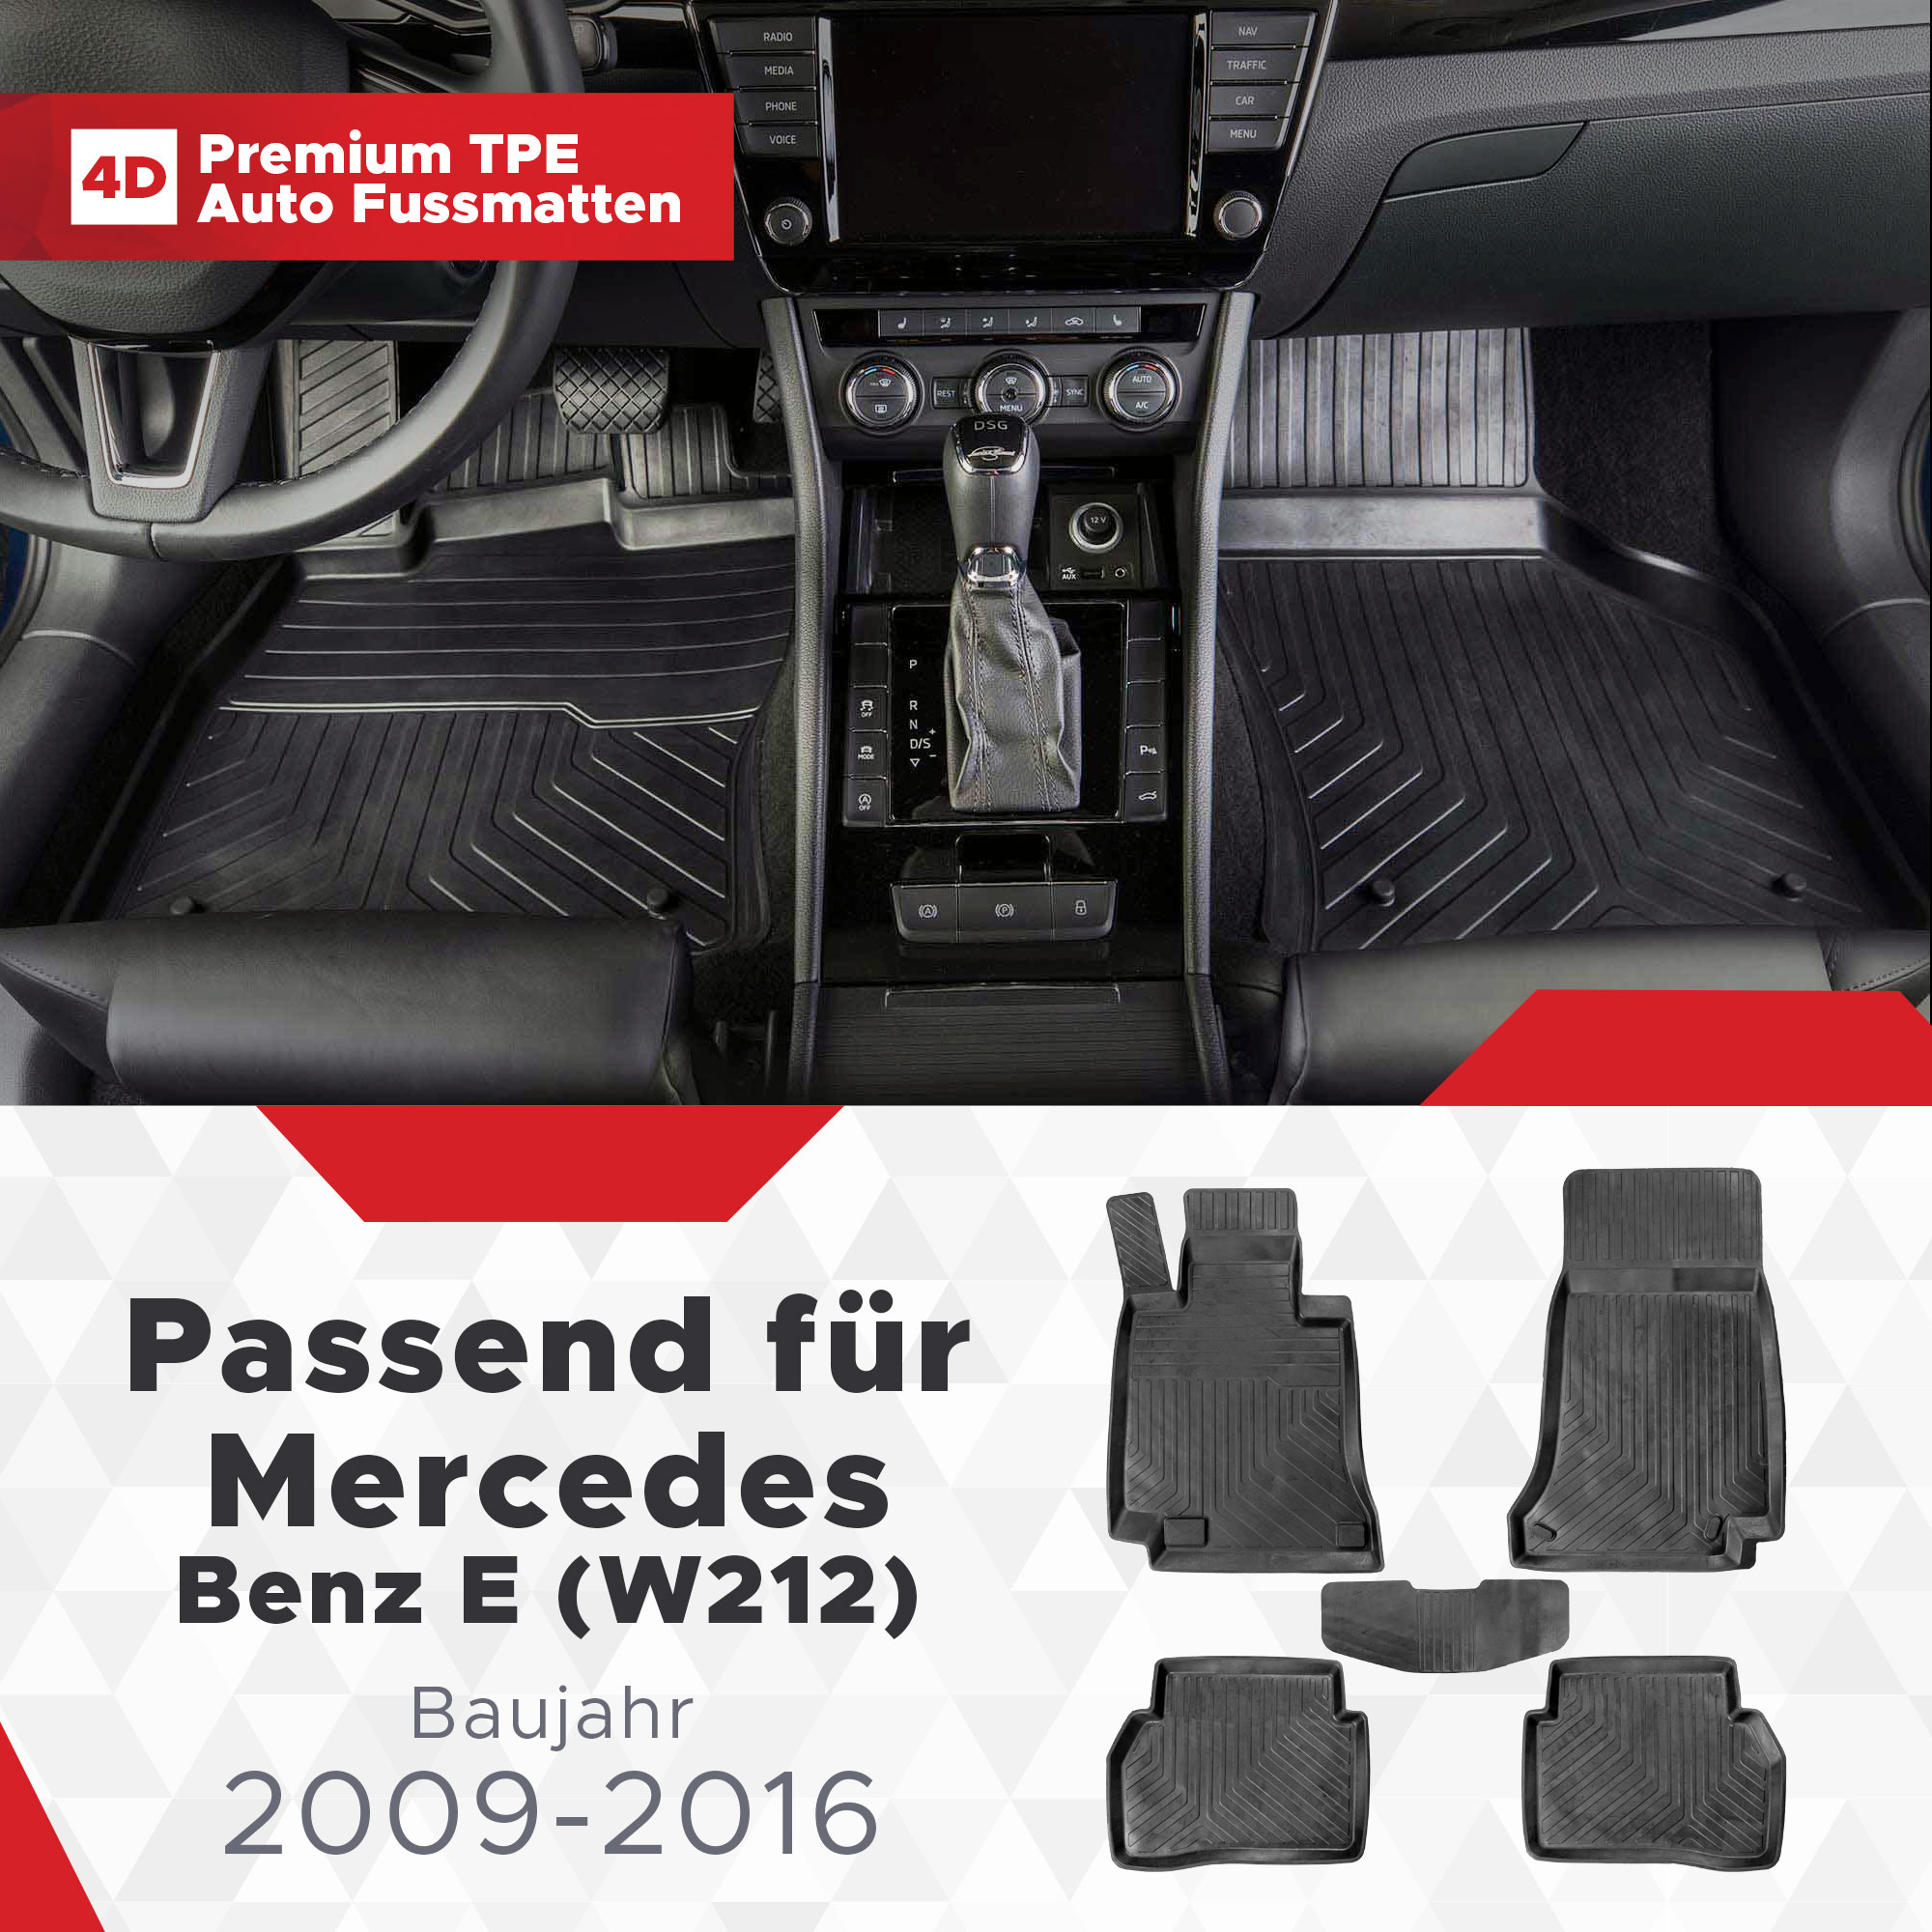 4D Mercedes Benz Bj Fussmatten Klasse 2009-2016 (W212) E Gummimatten